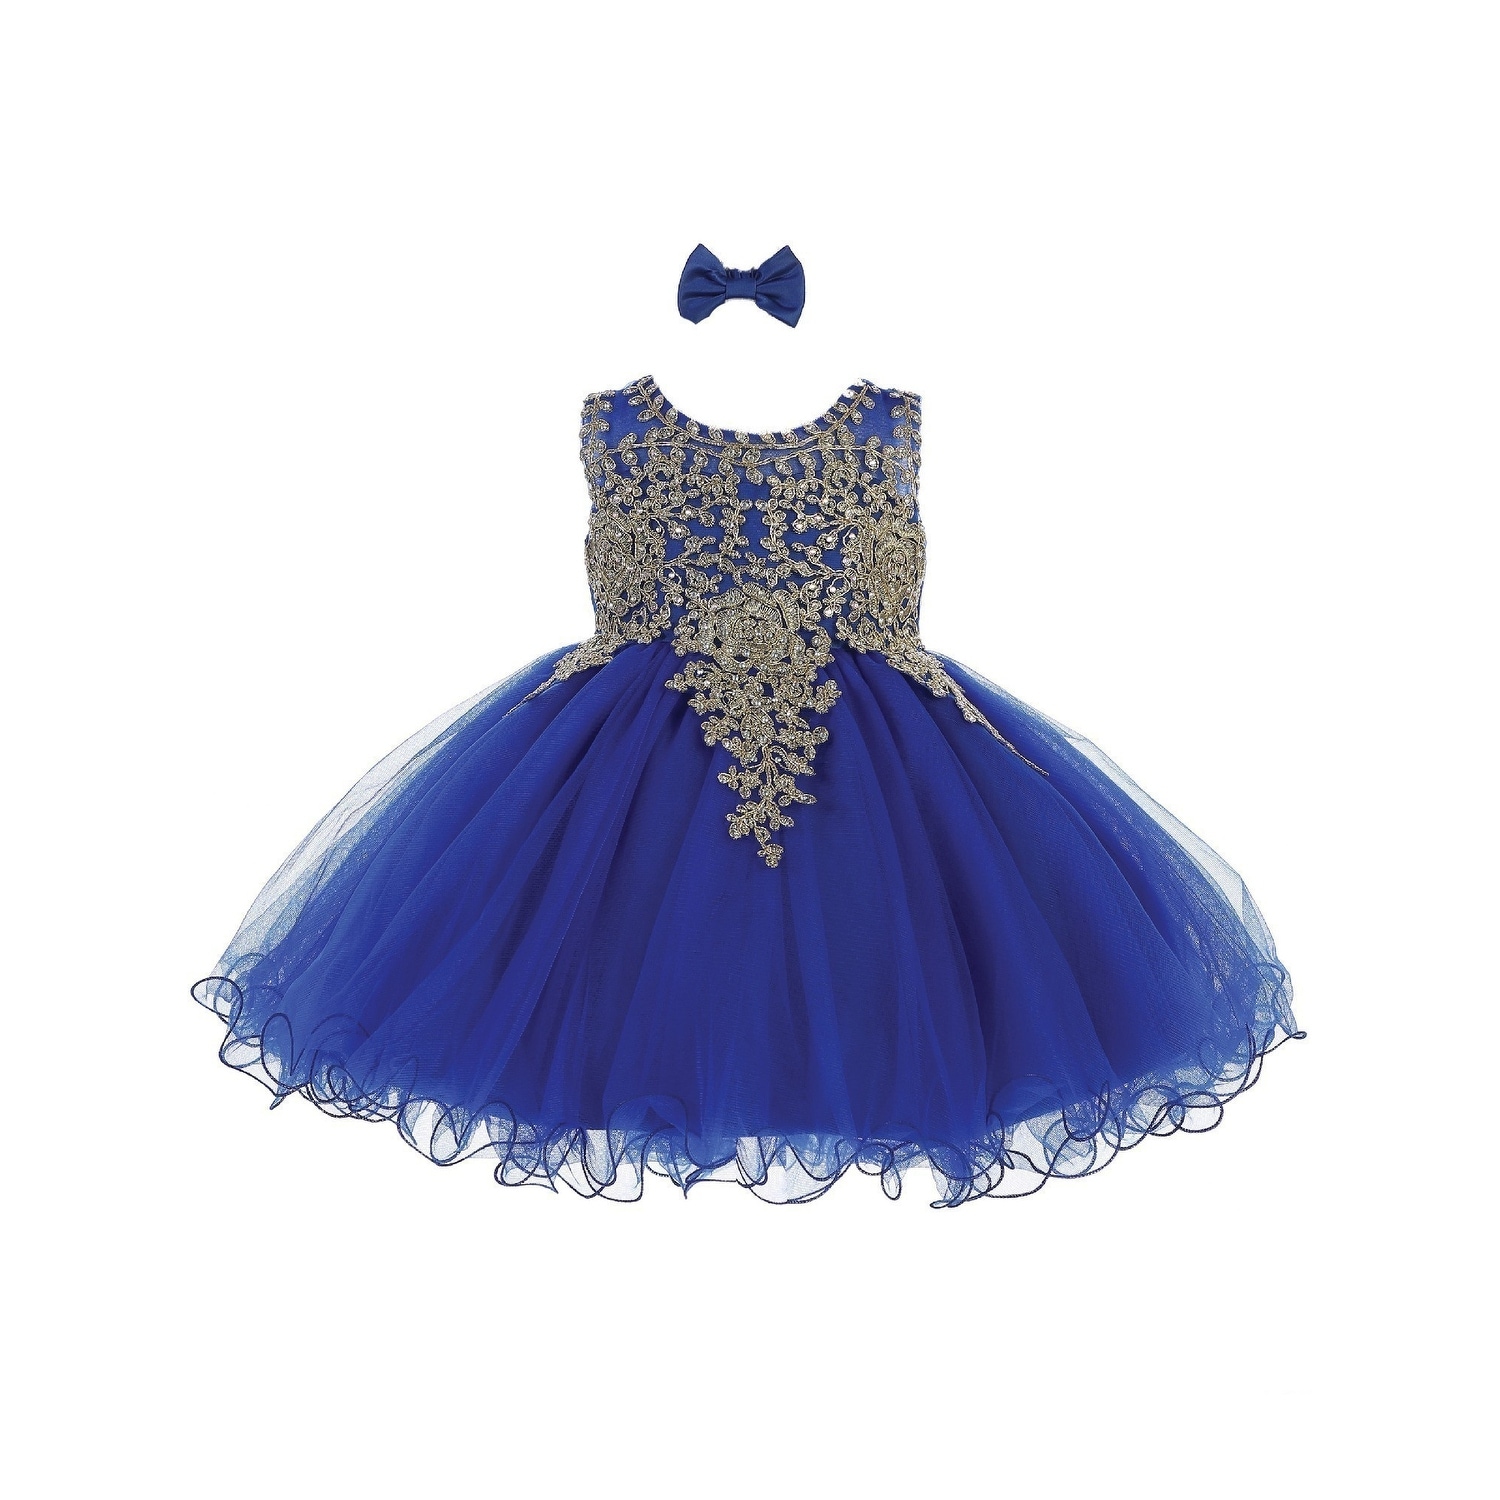 royal blue baby dress